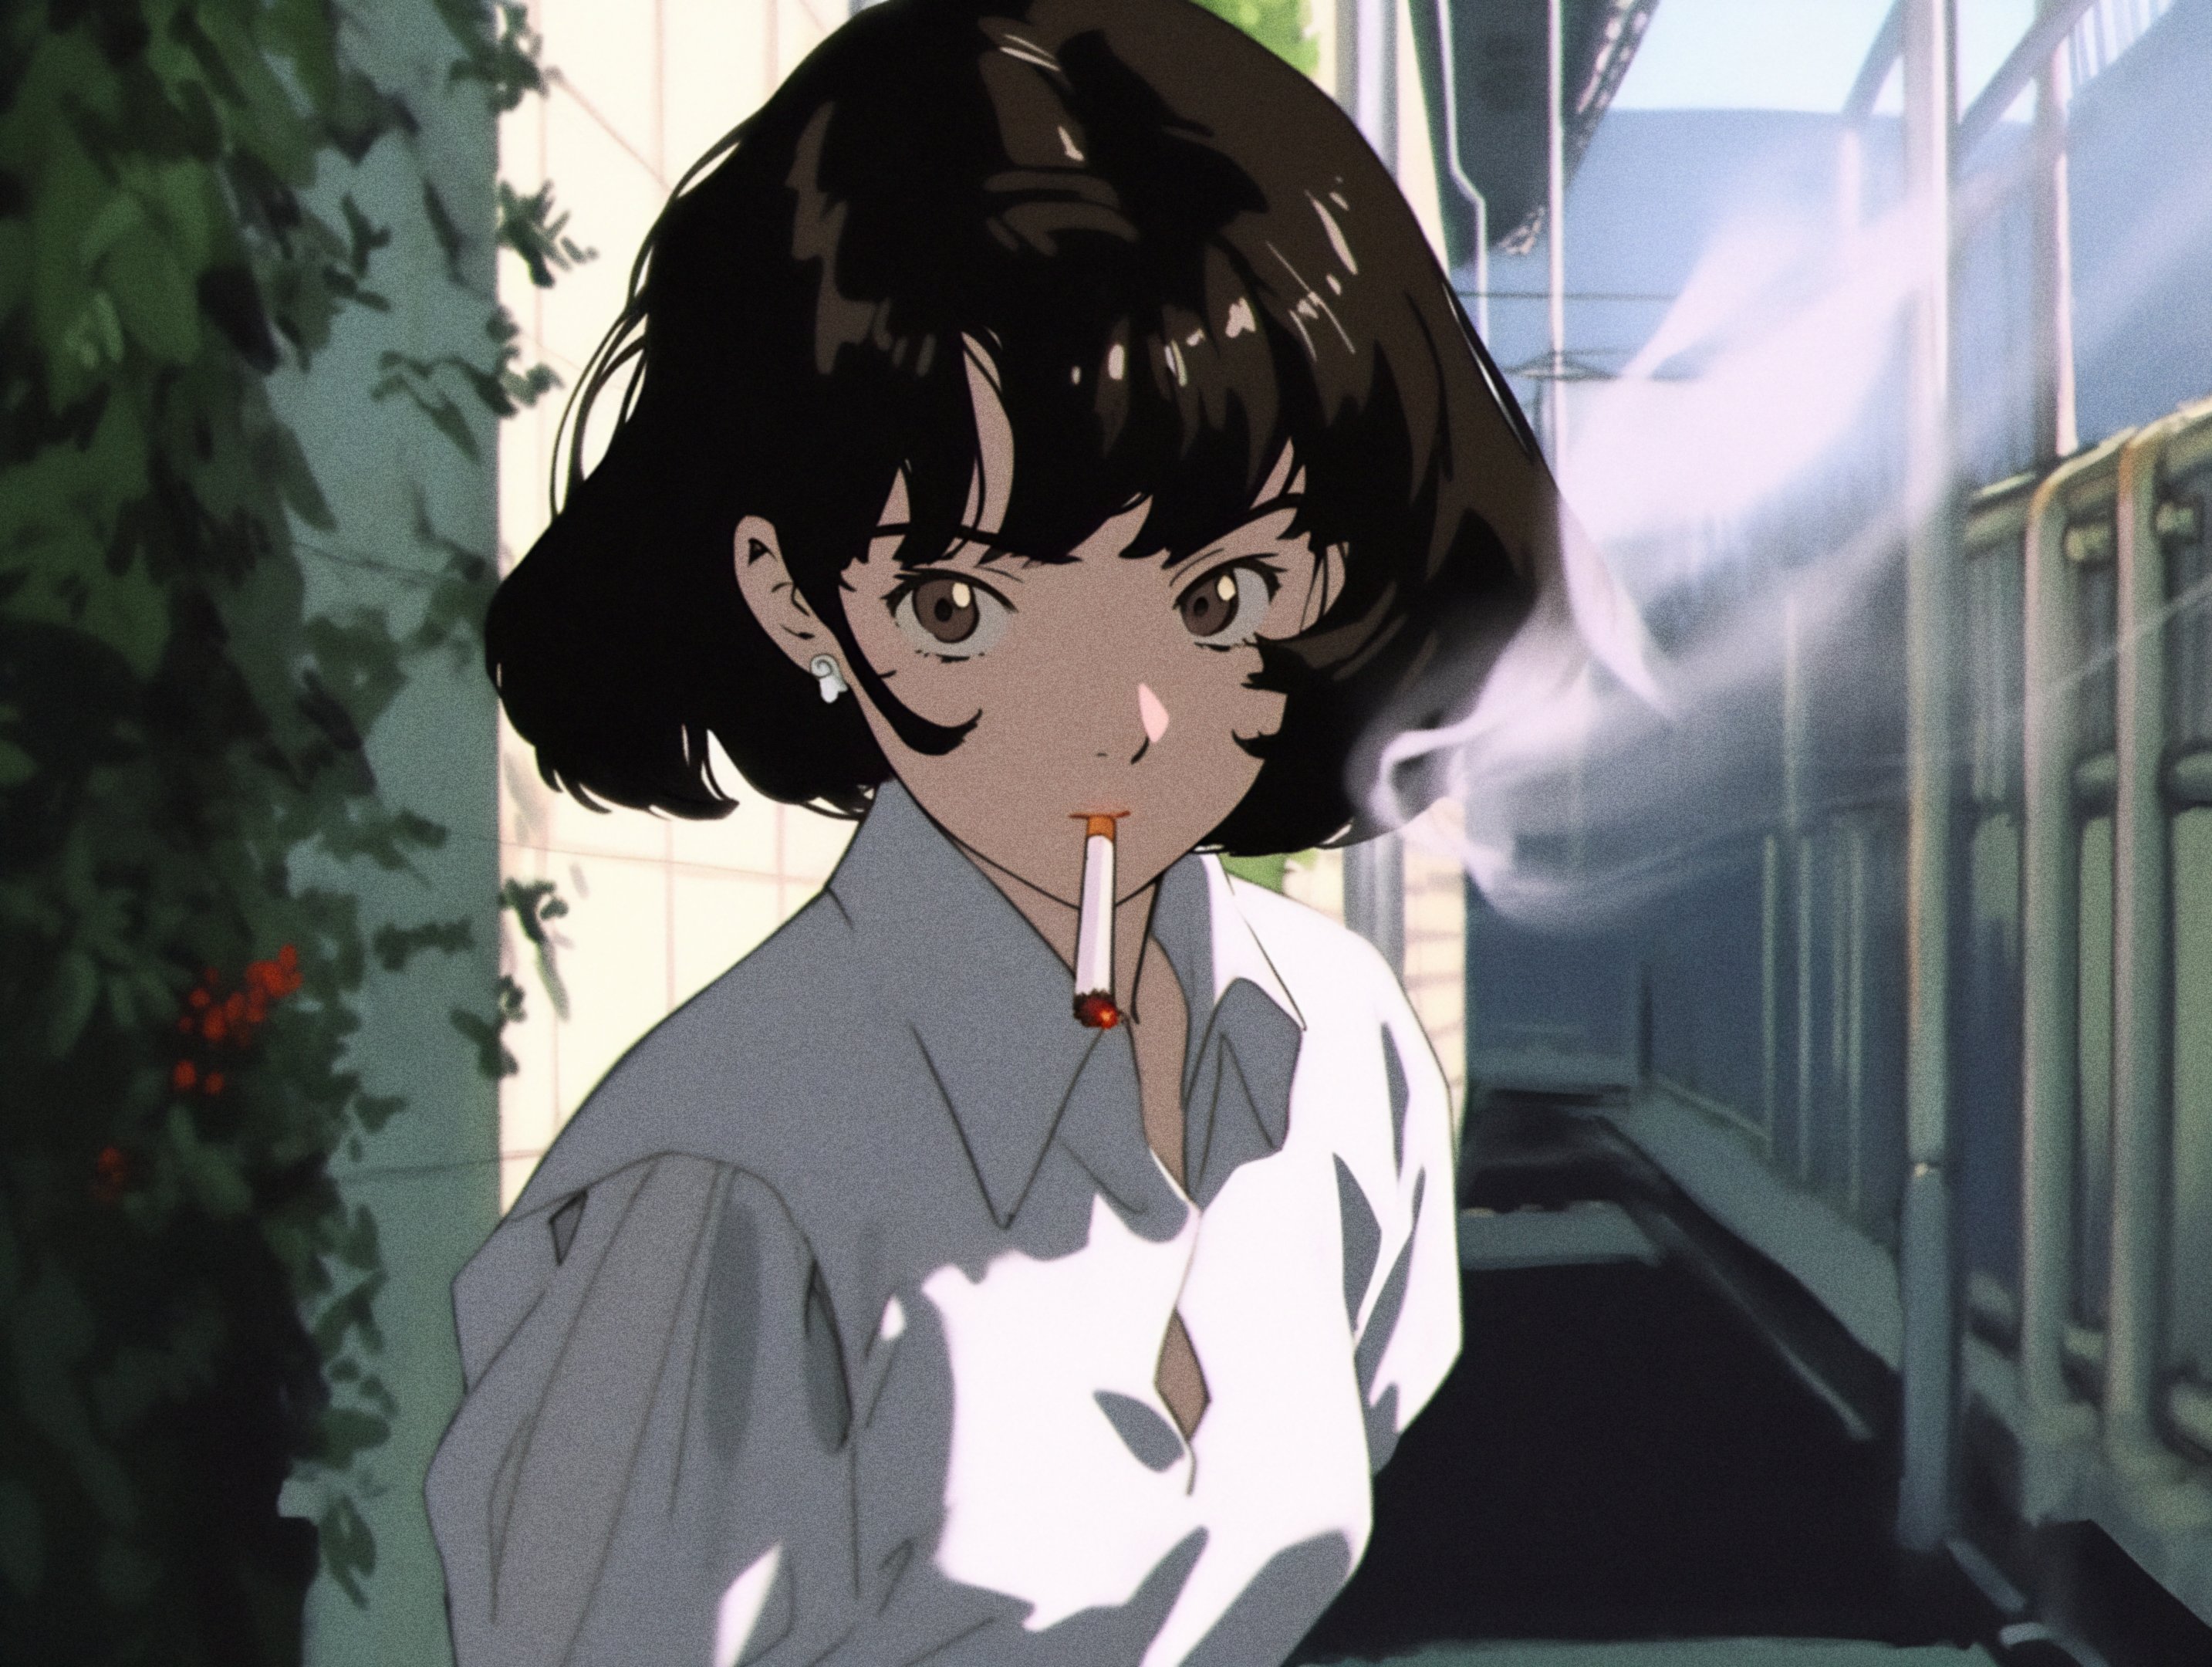 anime smoking cigarette by ogurasan3 on DeviantArt